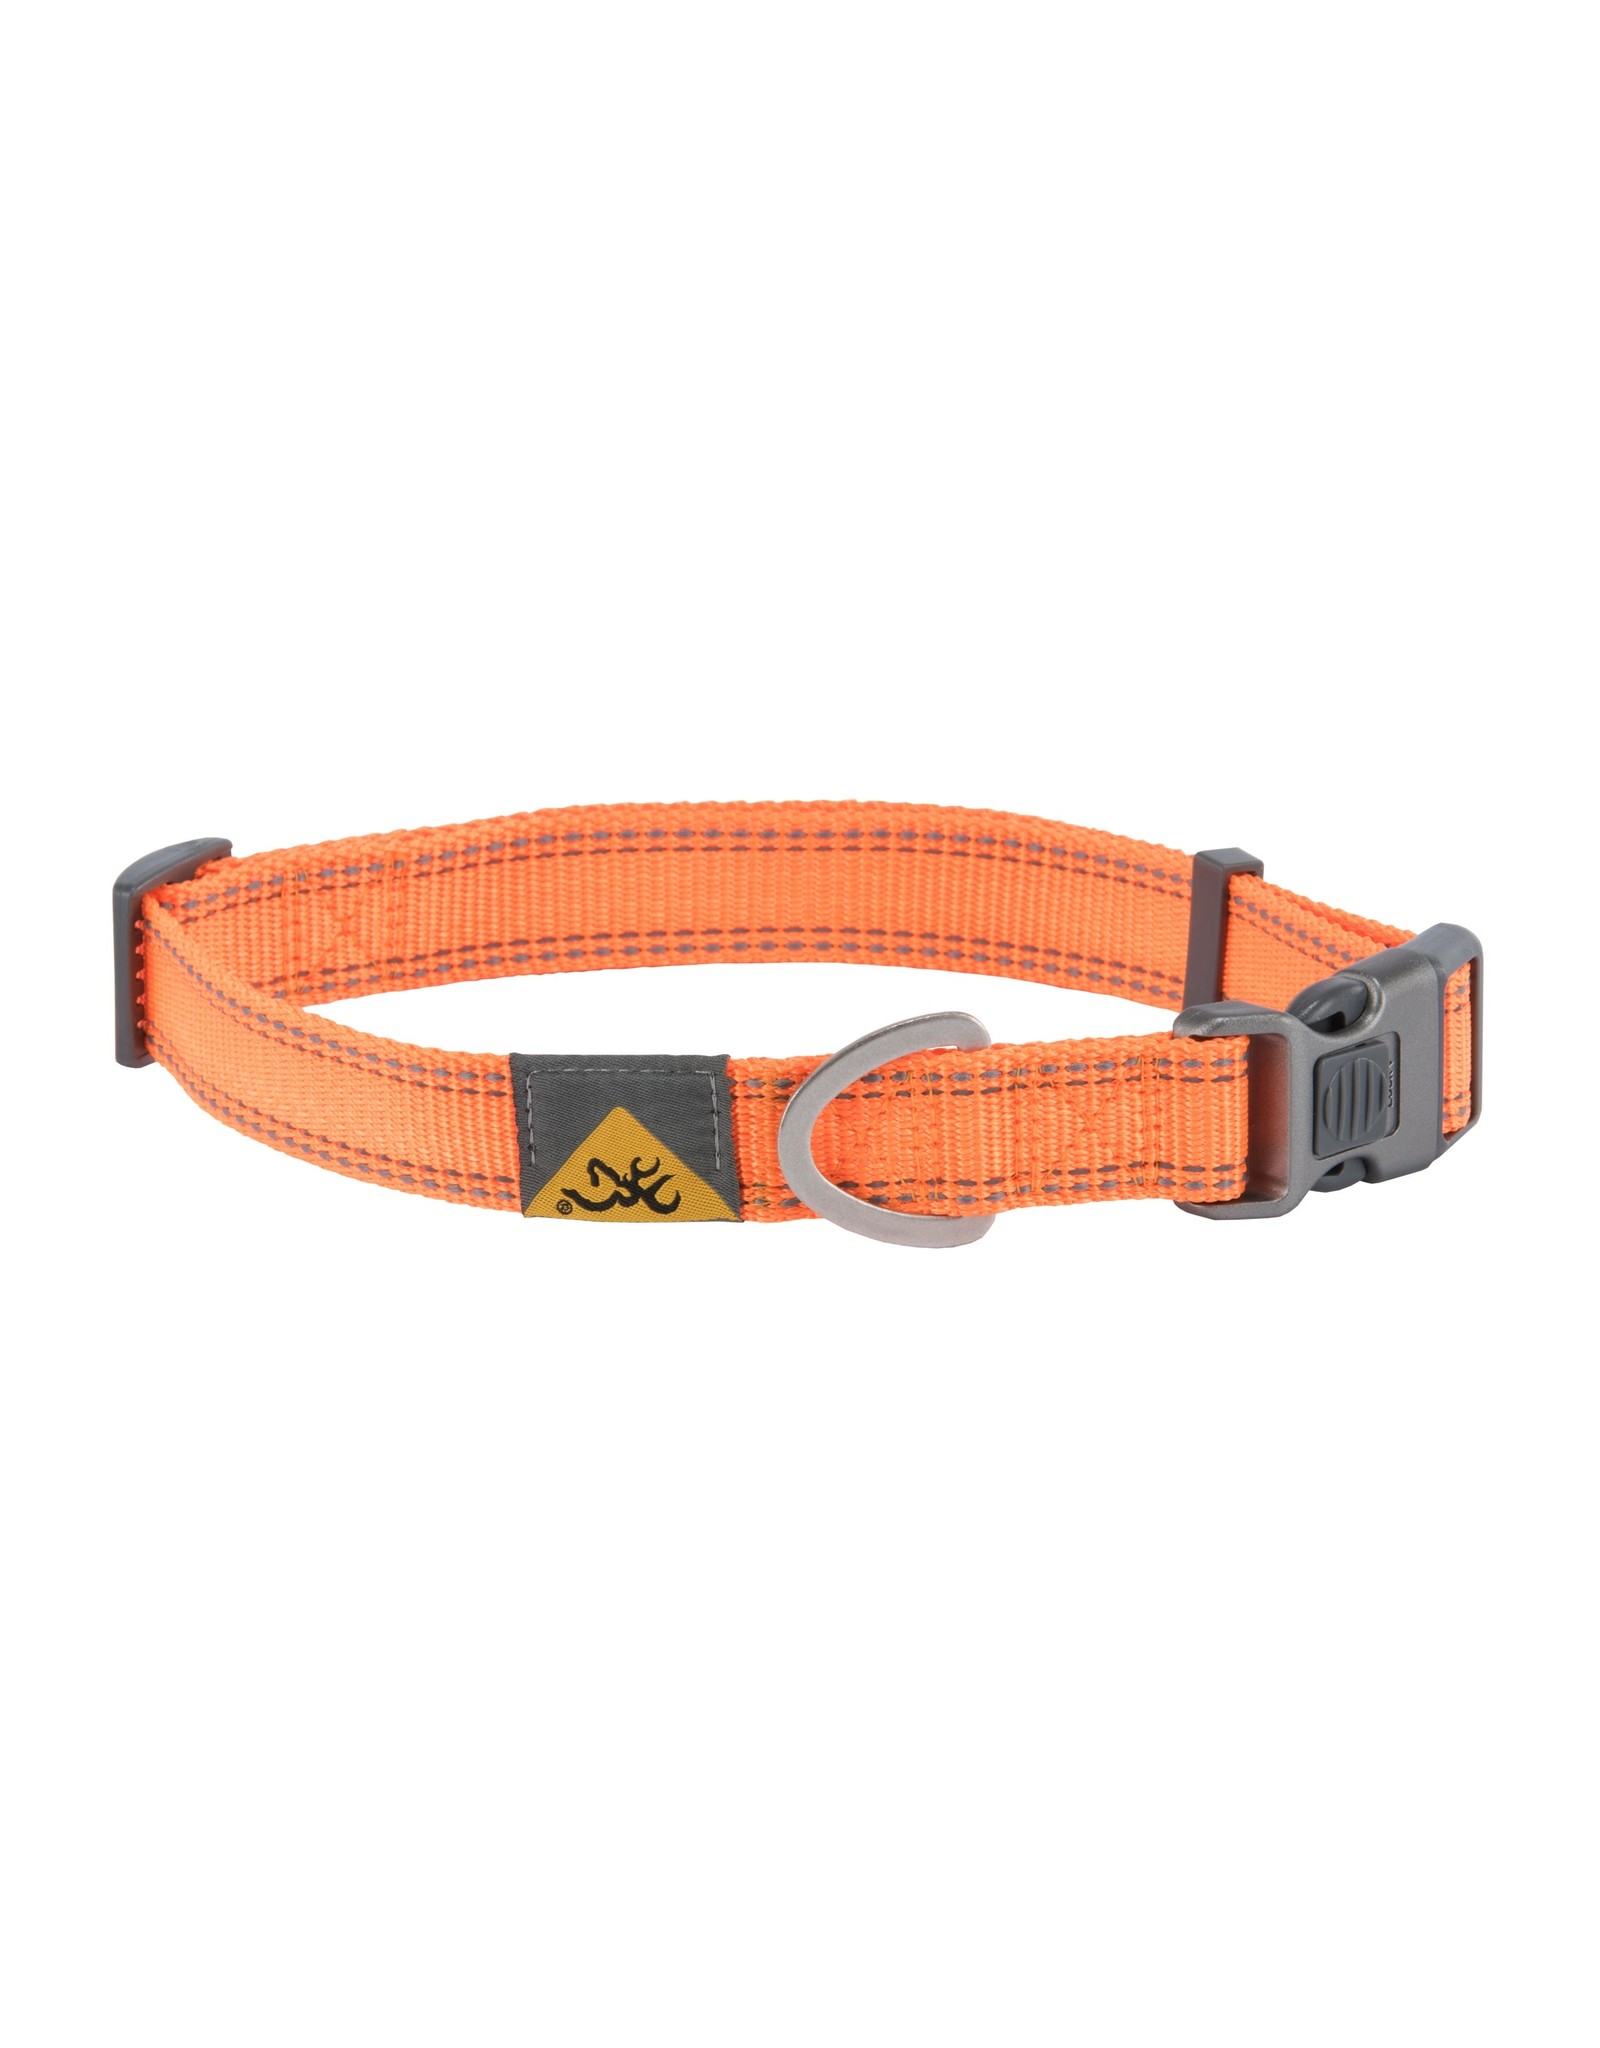 Browning Classic Webbing Dog Collar - Blaze Orange - Med